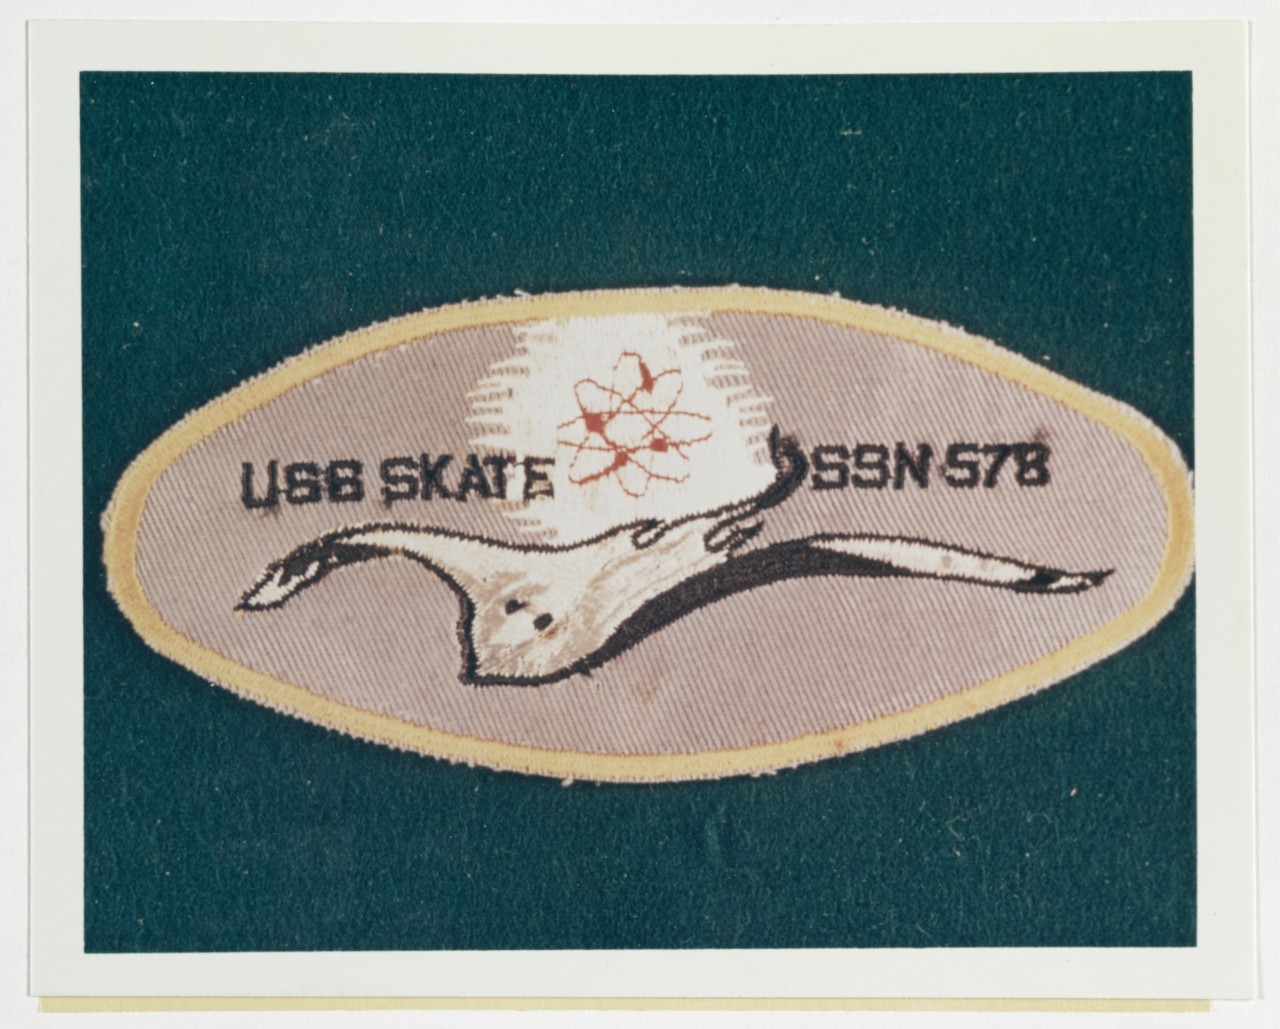 Insignia: USS SKATE (SSN-578)